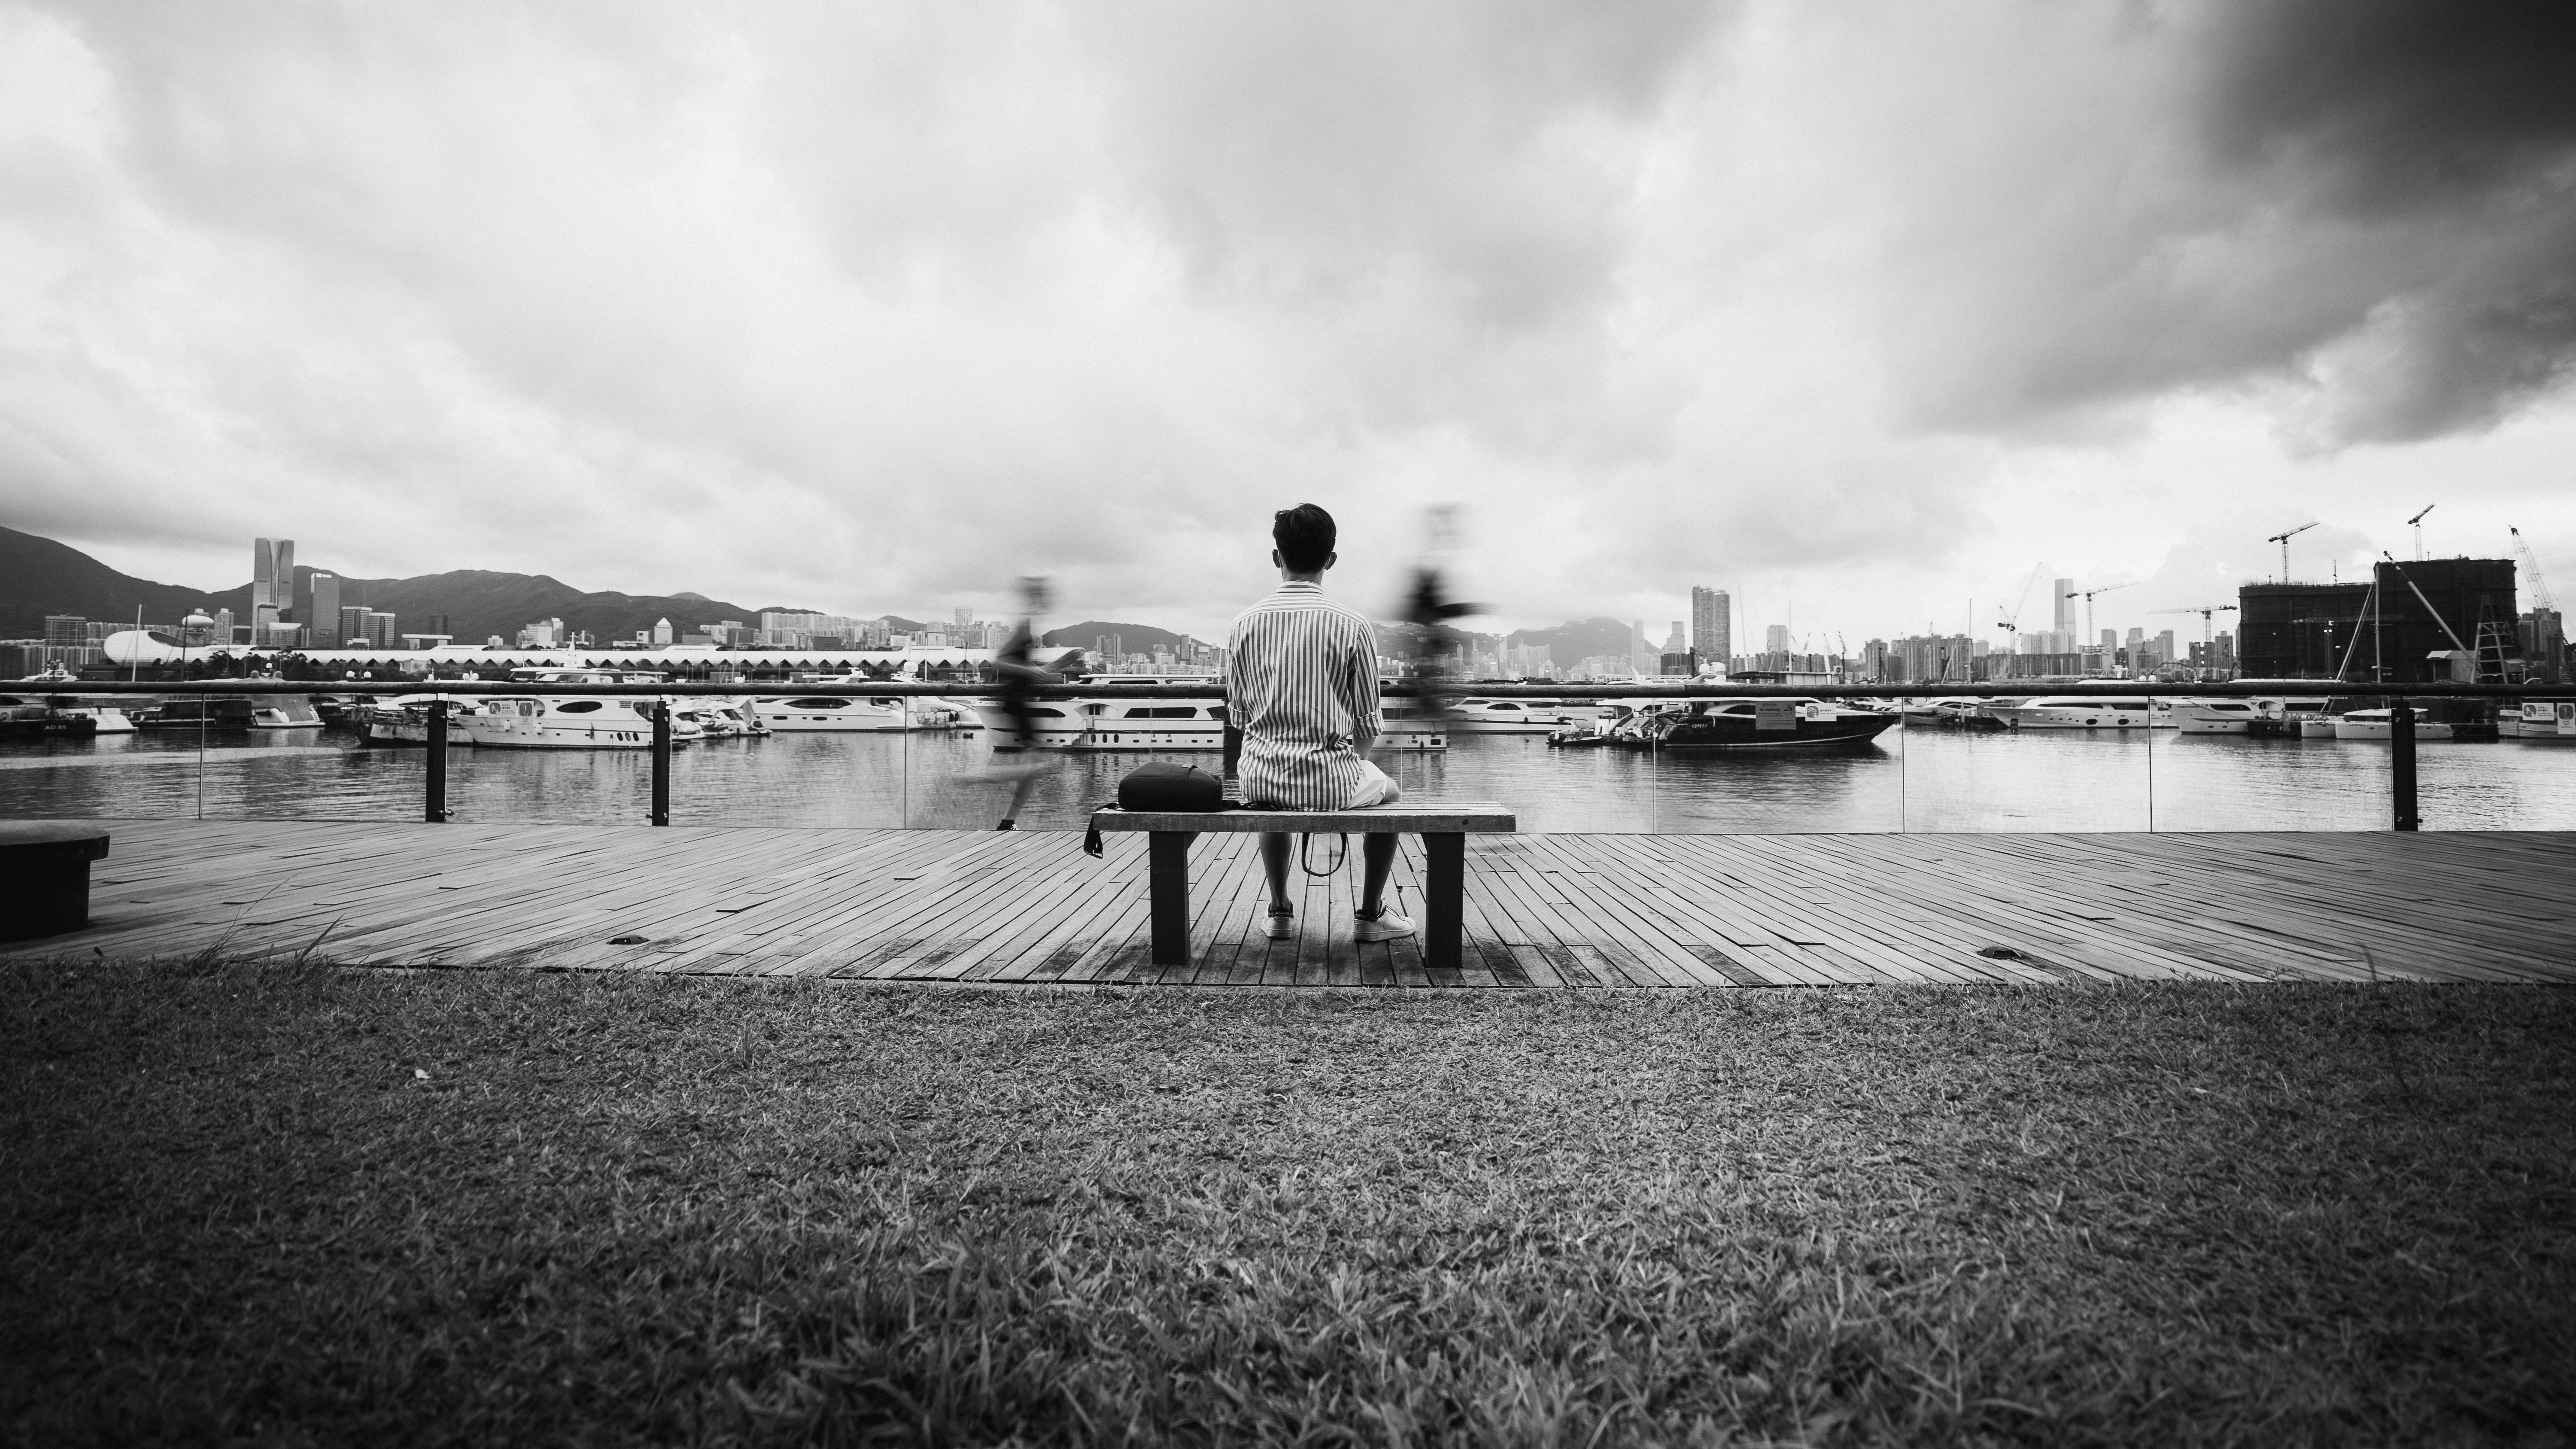 man sitting on bench near body of water